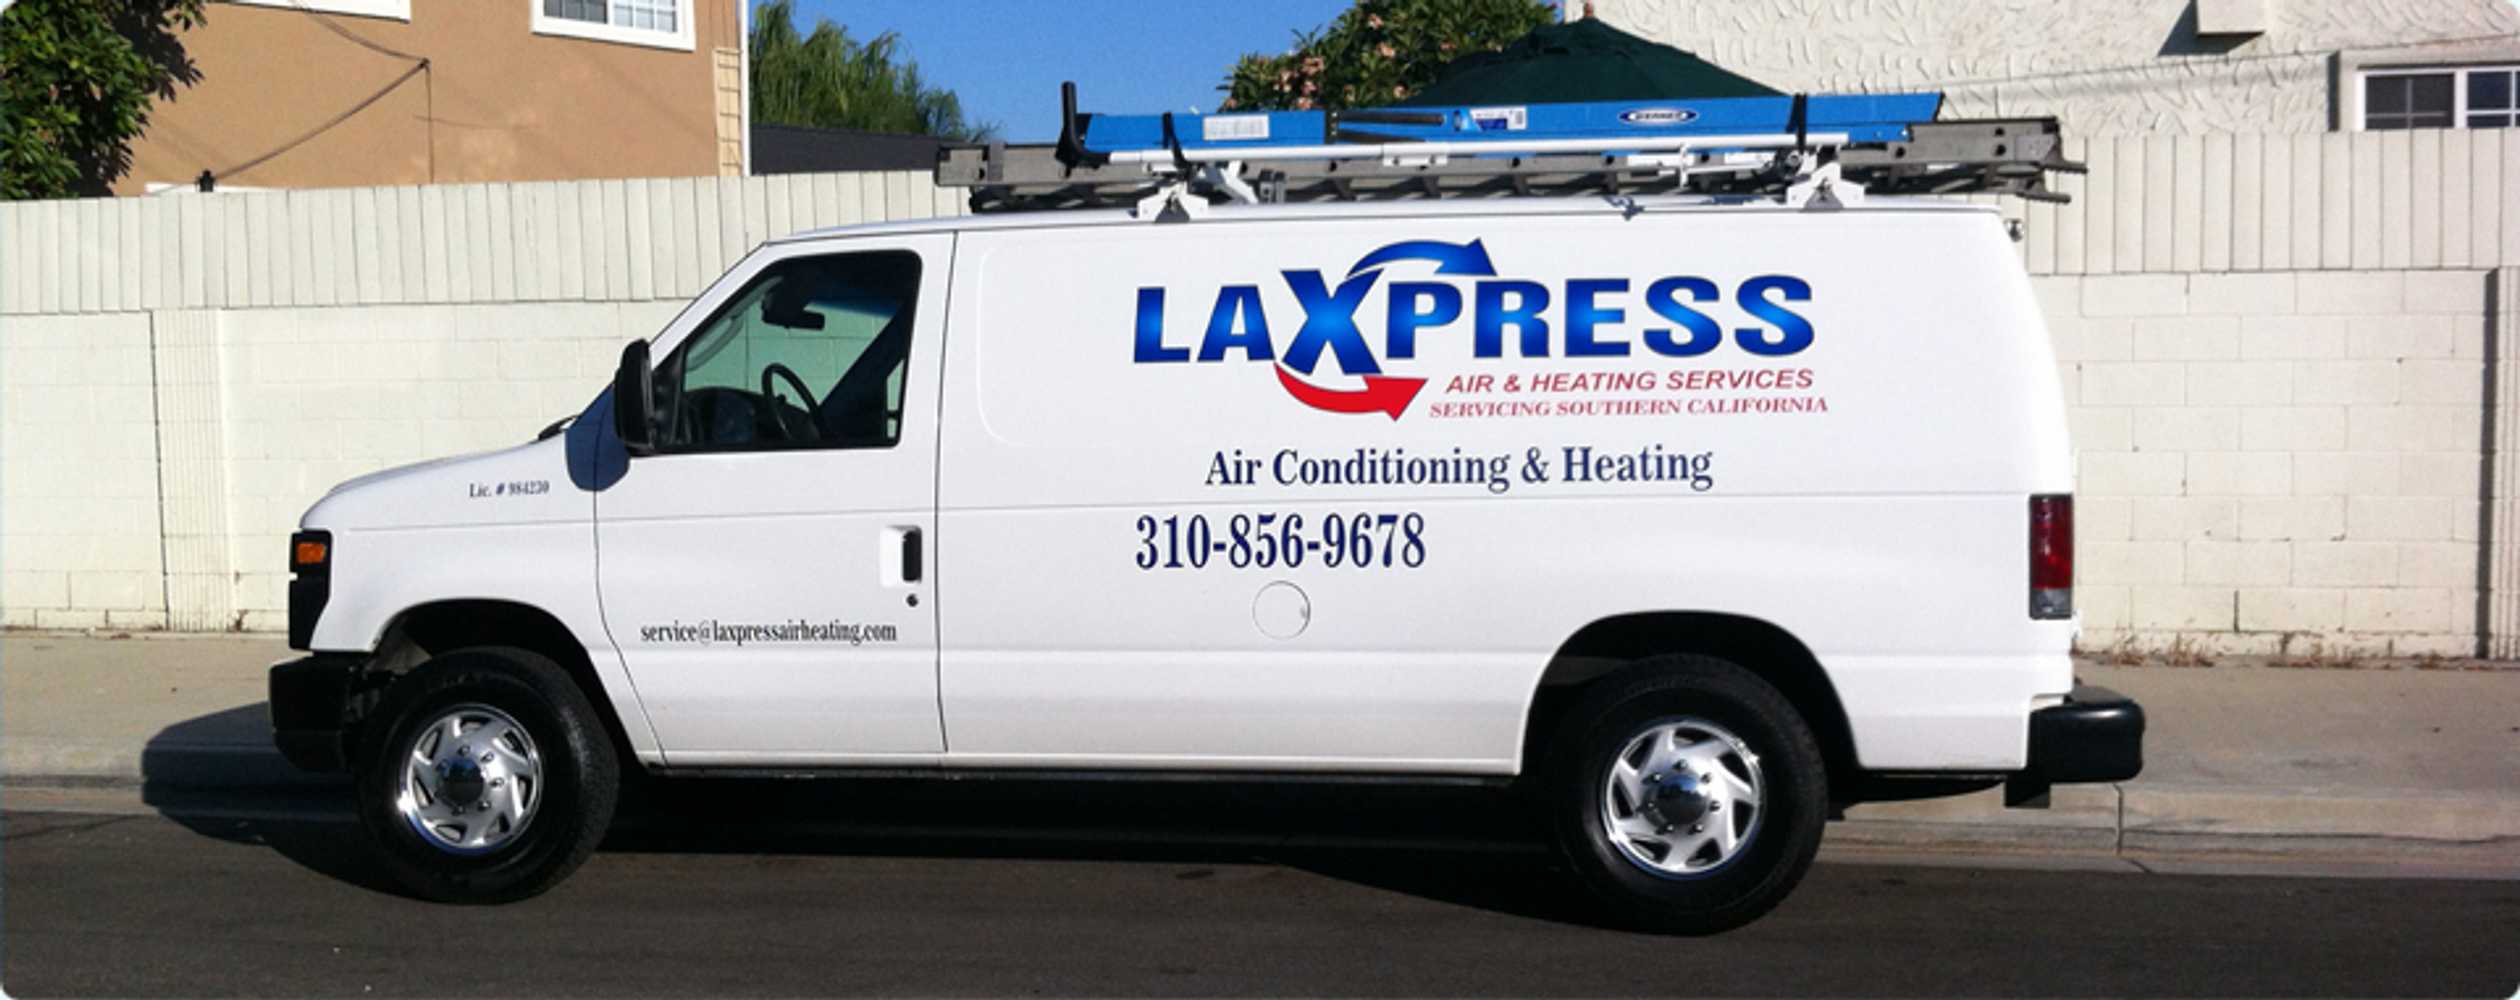 La Xpress Air & Heating Services Project